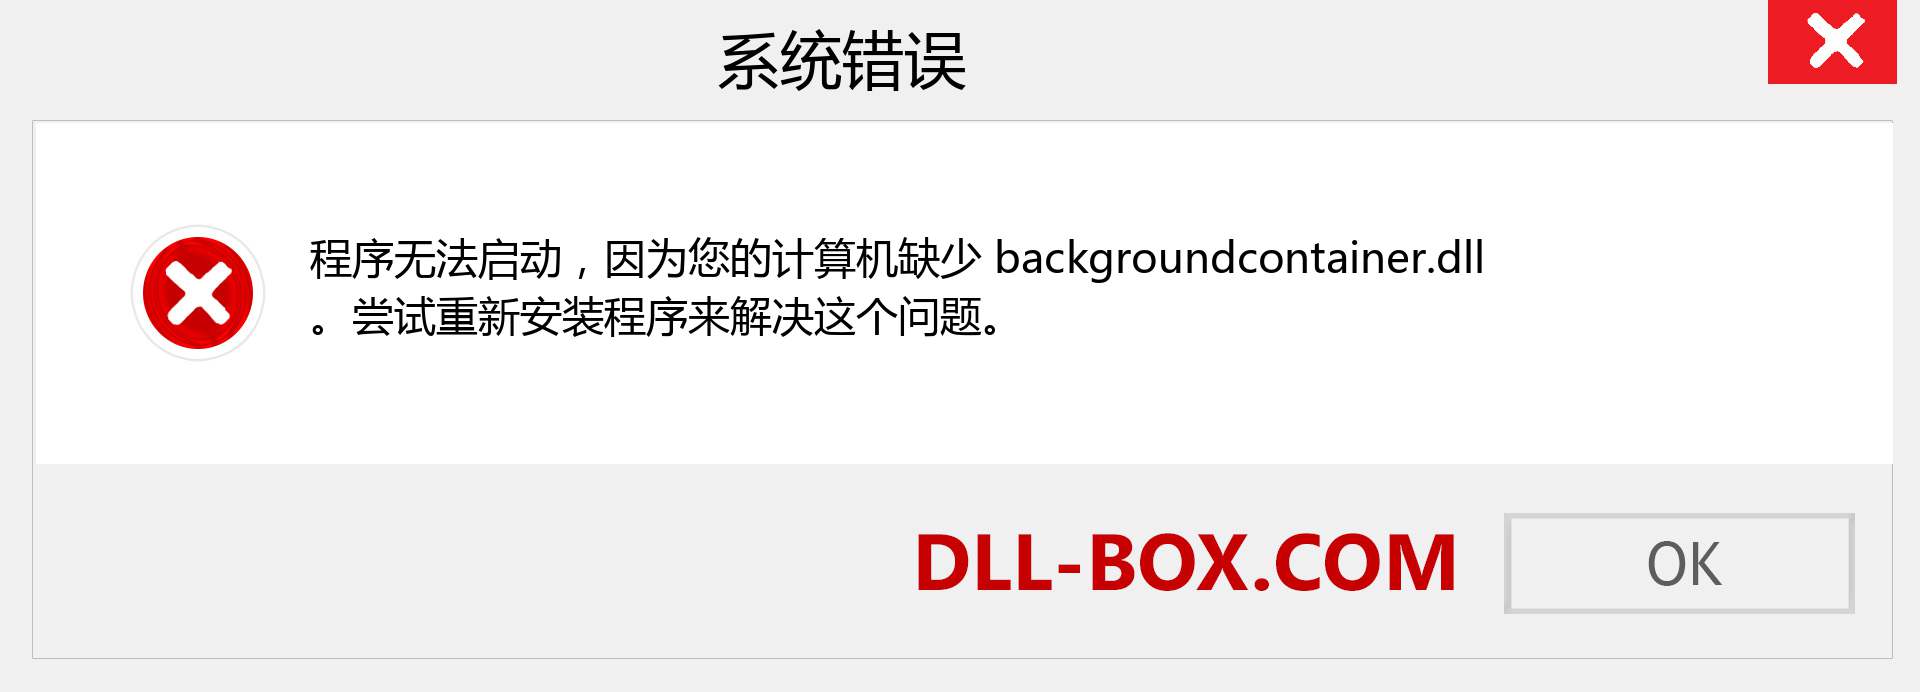 backgroundcontainer.dll 文件丢失？。 适用于 Windows 7、8、10 的下载 - 修复 Windows、照片、图像上的 backgroundcontainer dll 丢失错误